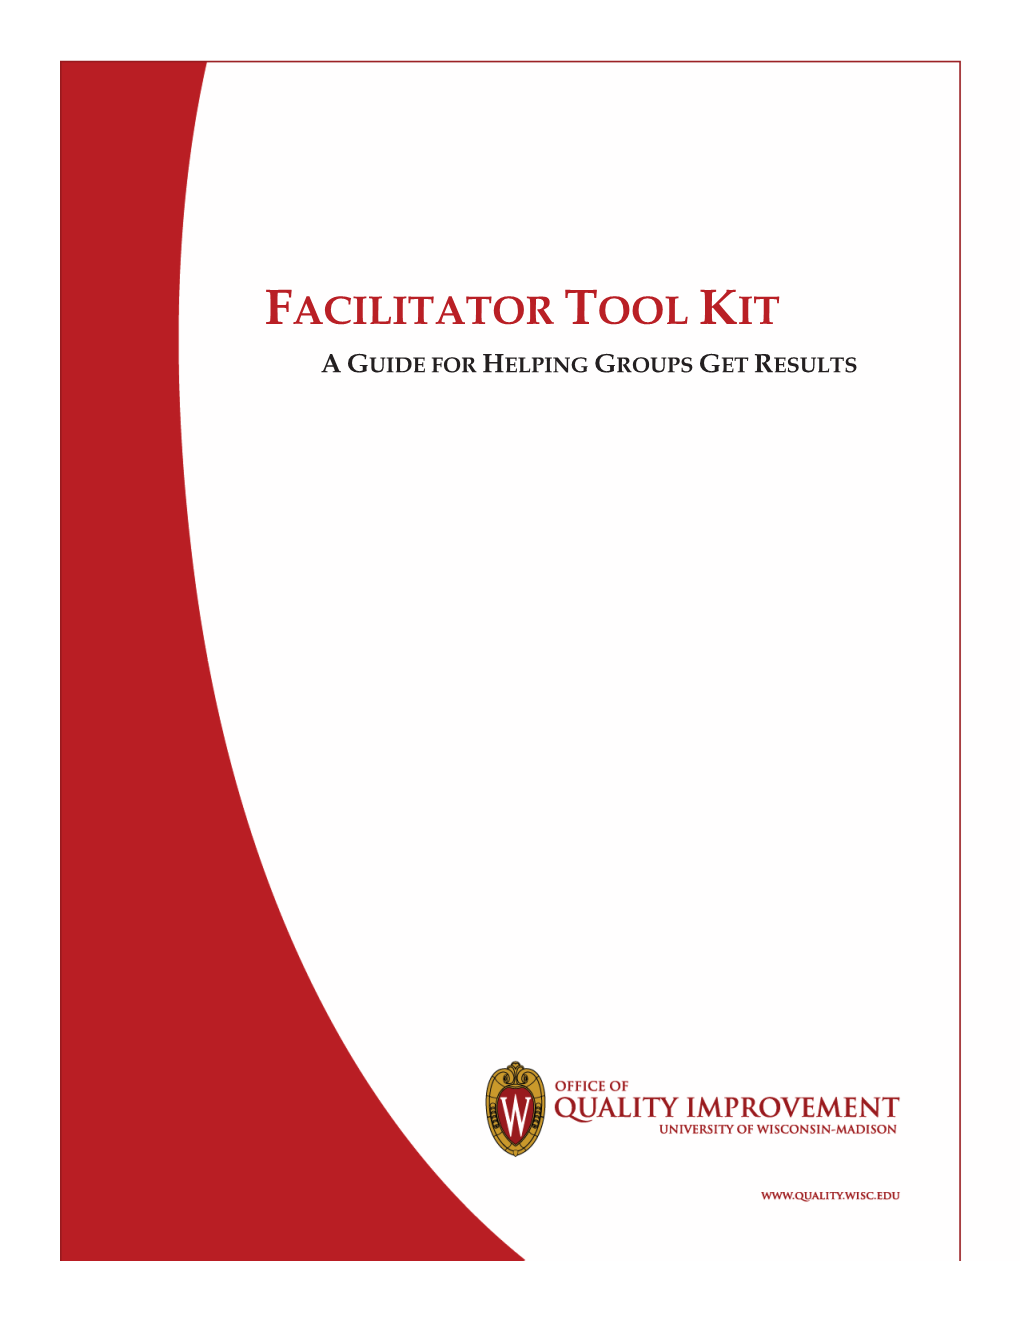 Download the Facilitator Tool